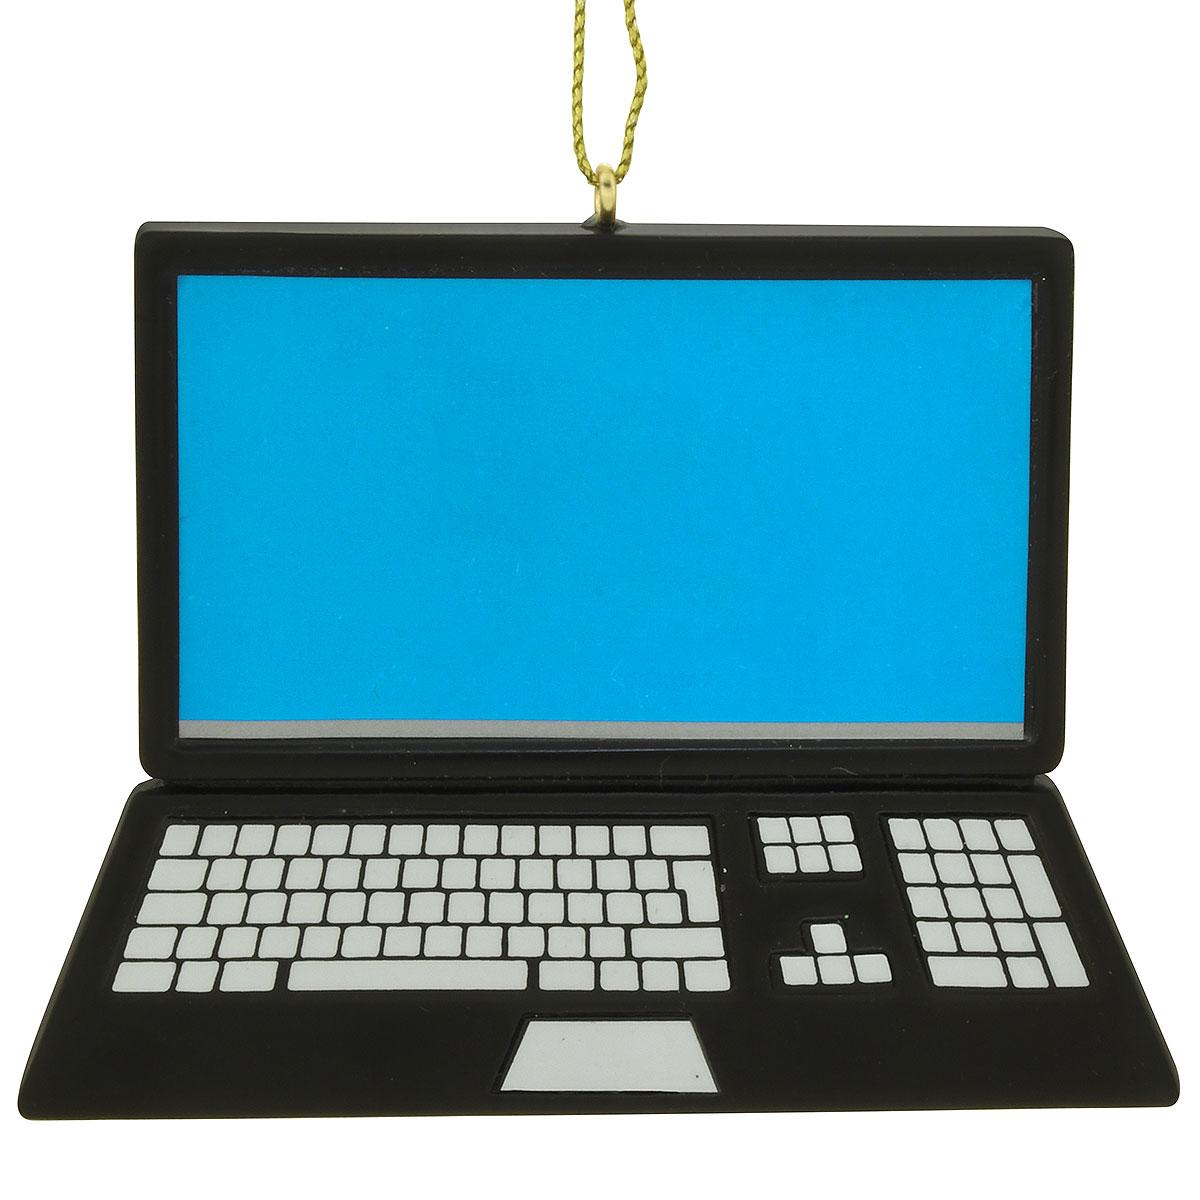 Laptop Resin Ornament